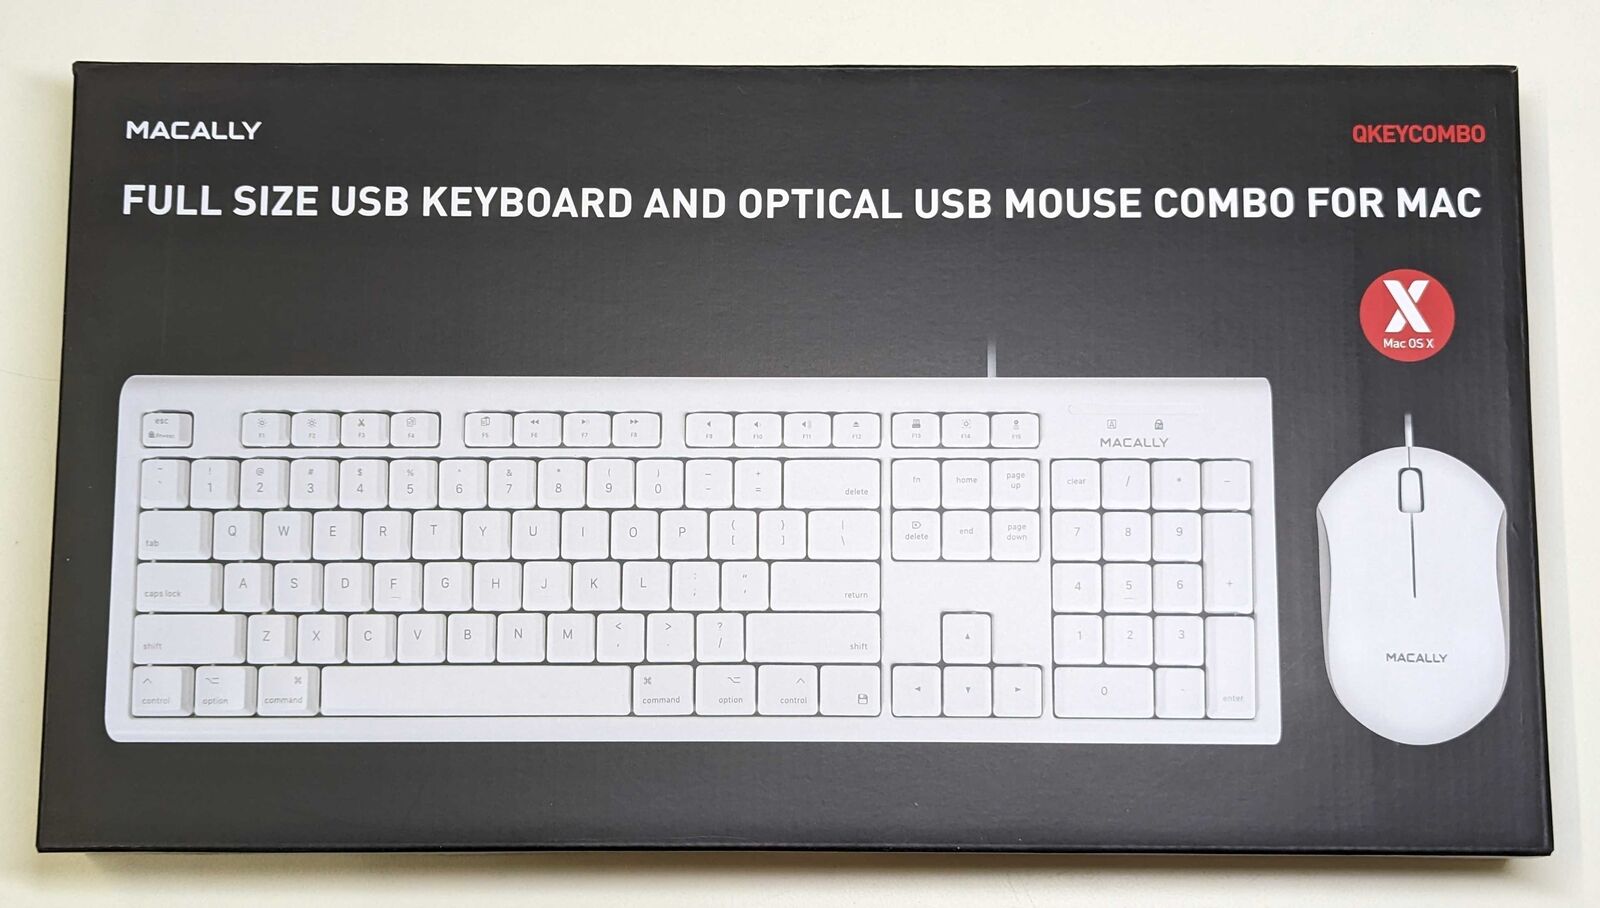 Macally QKEYCOMBO Full Size USB Keyboard & Optical USB Mouse Combo for Mac